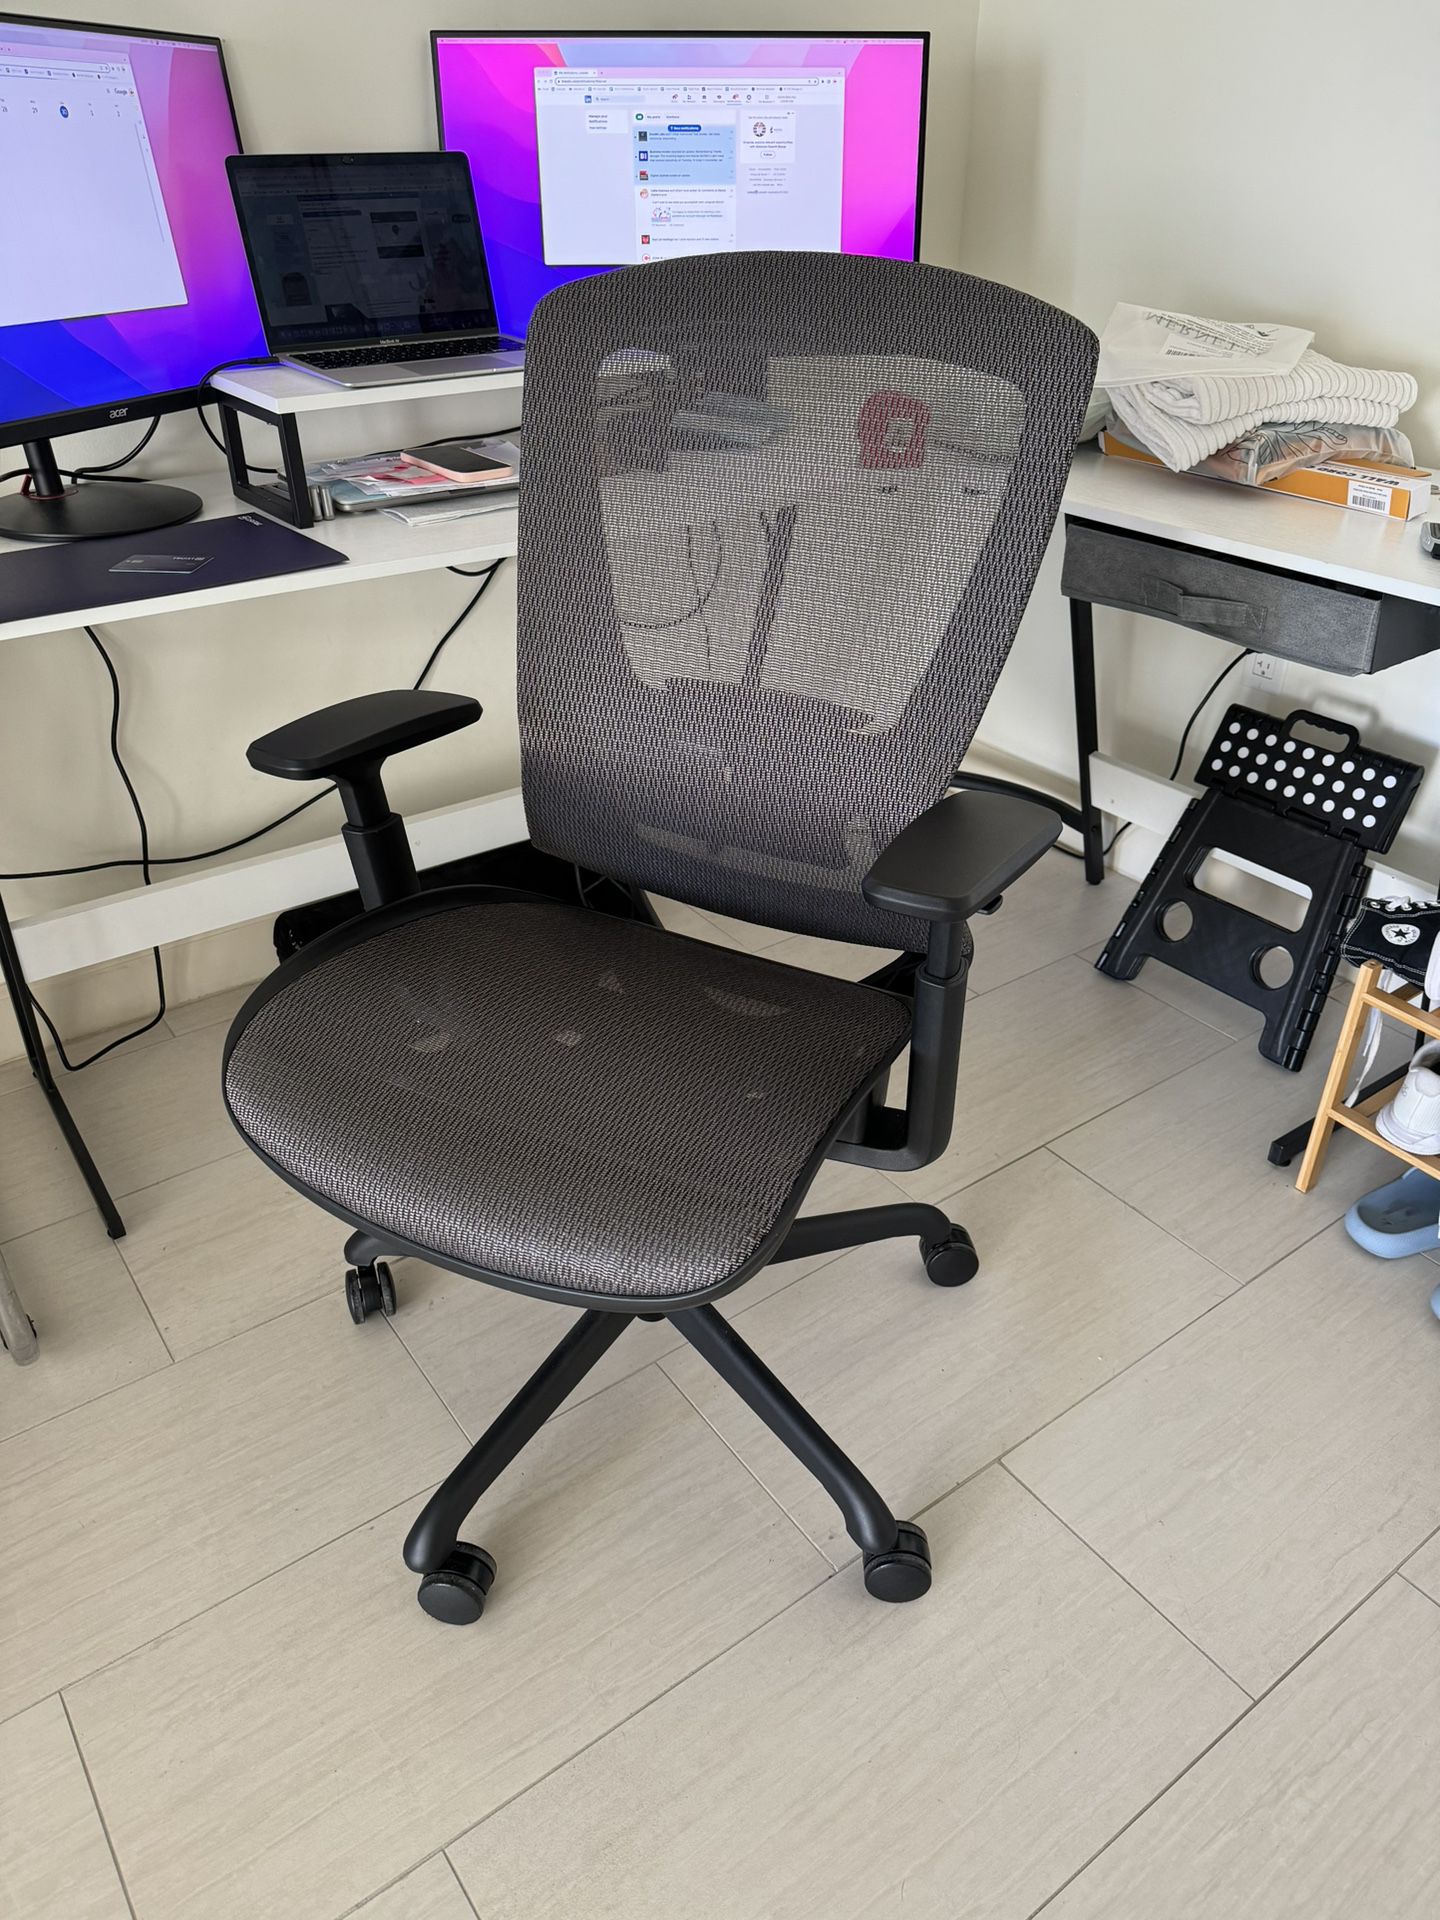 Elabest Ergonomic Office Chair 